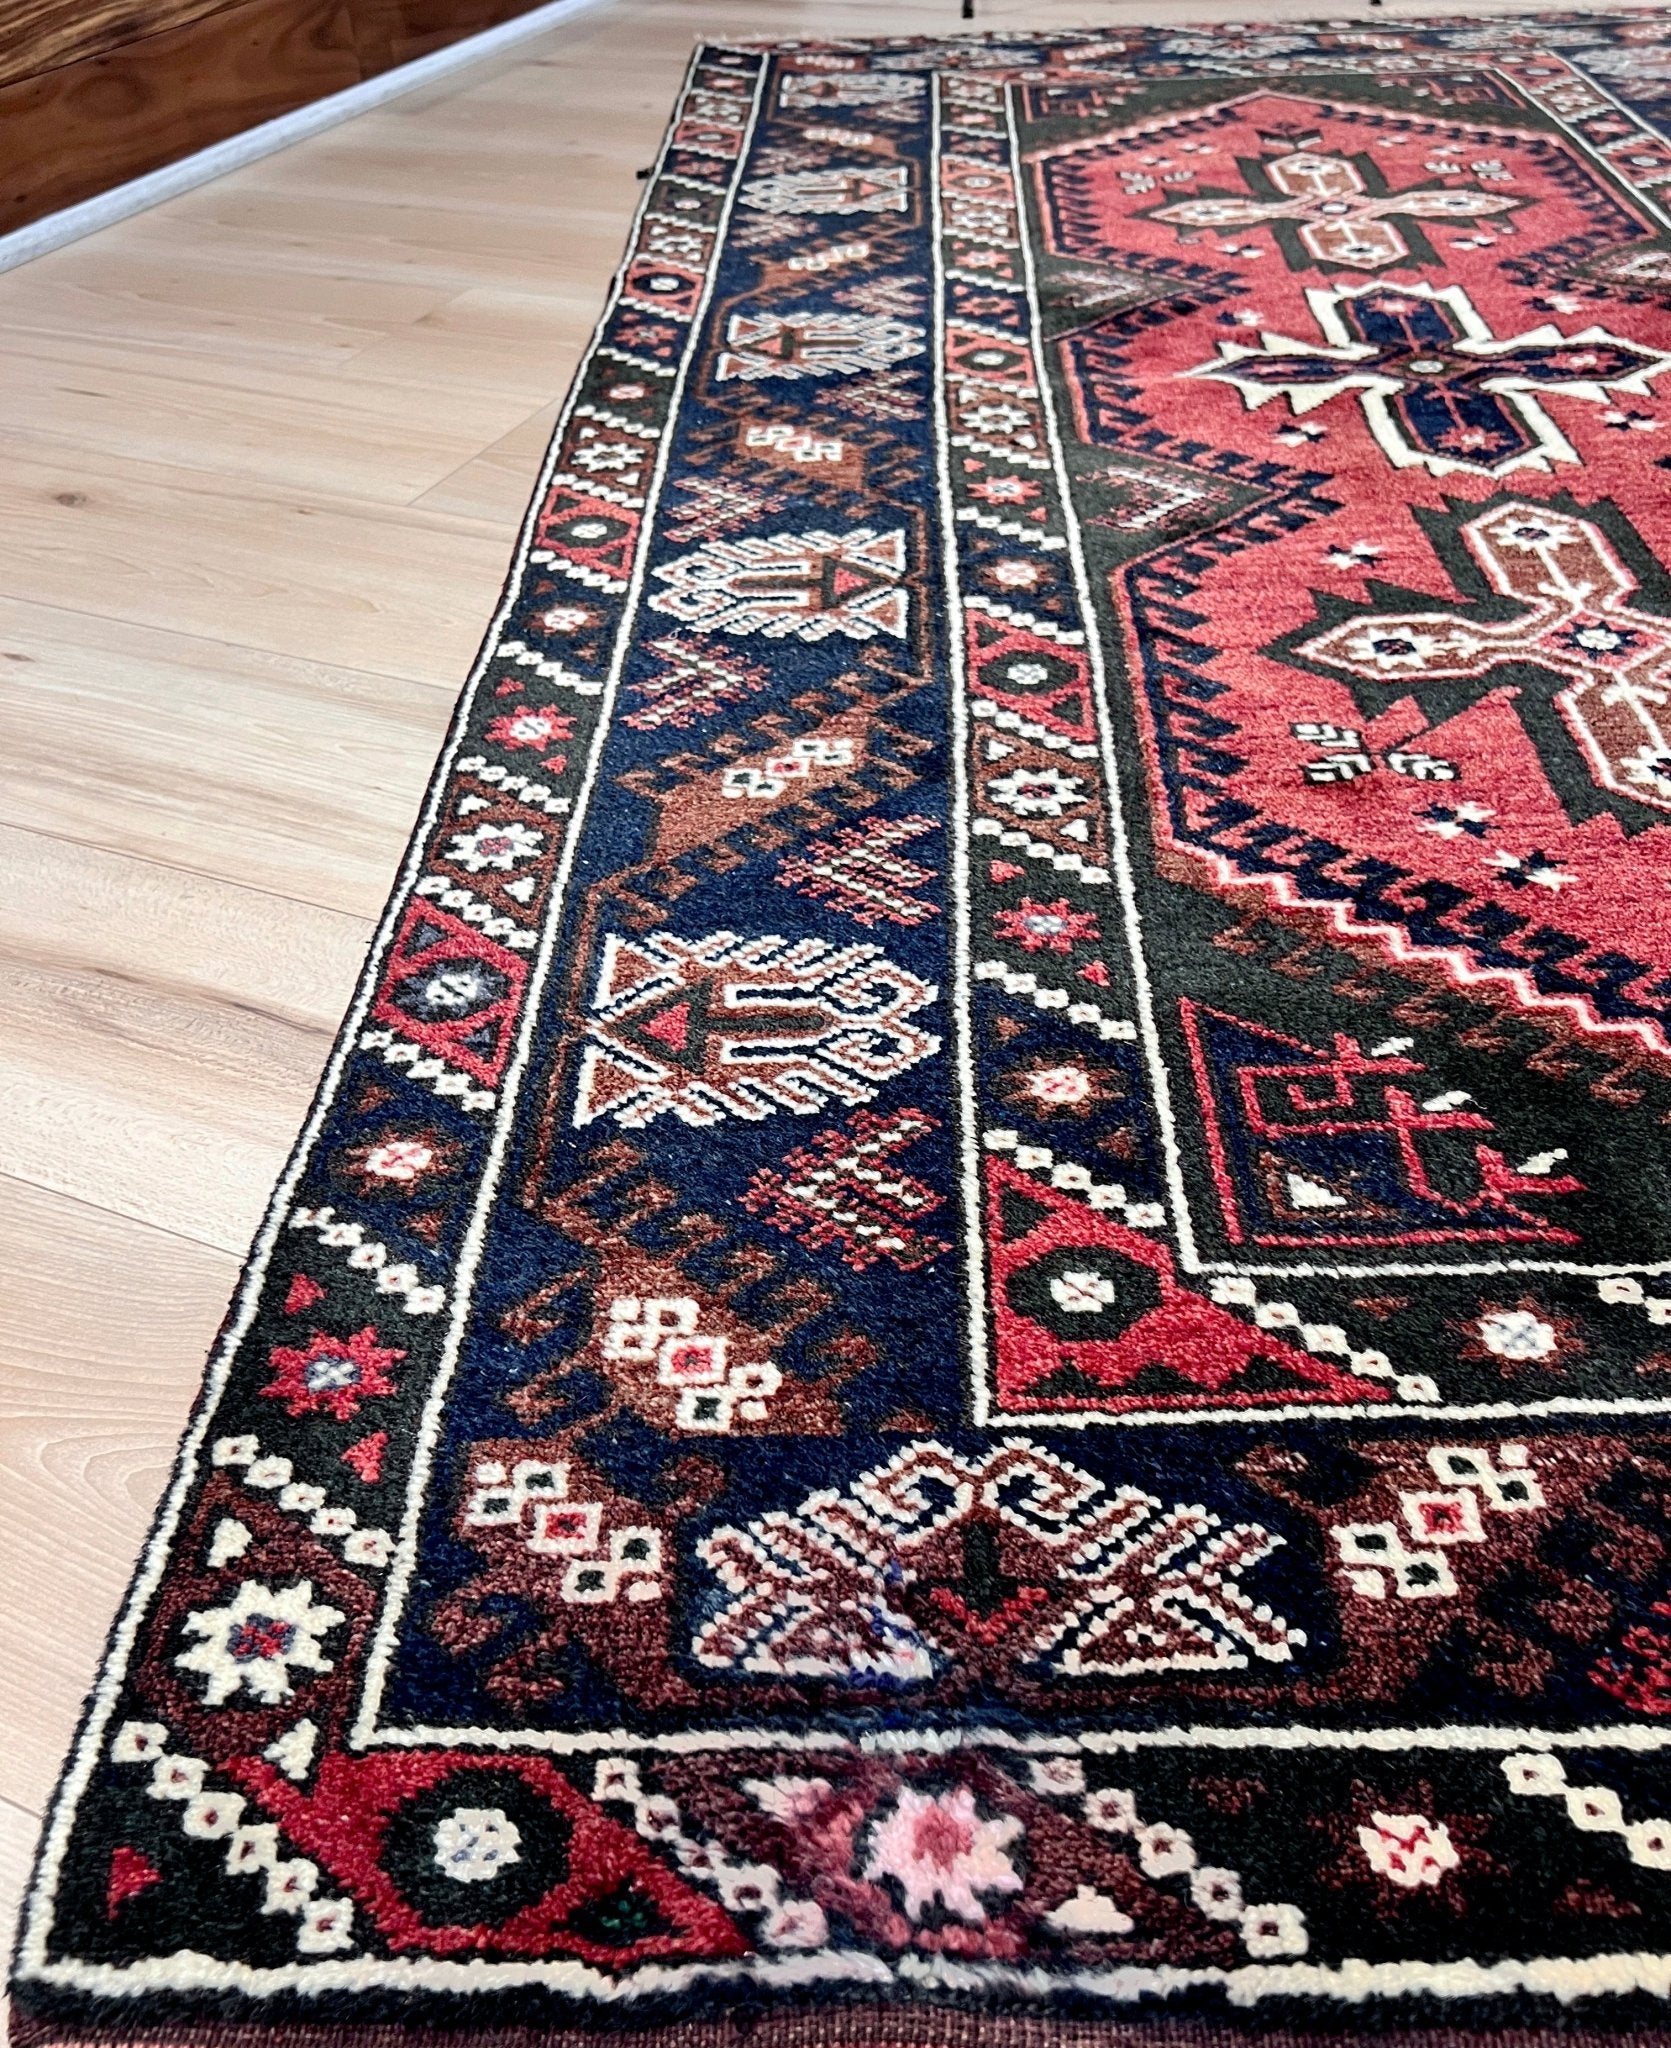 Dosemealti vintage turkish rug shop San Francisco Bay Area. 4x6 Scatter rug. Buy handmade oriental rug online